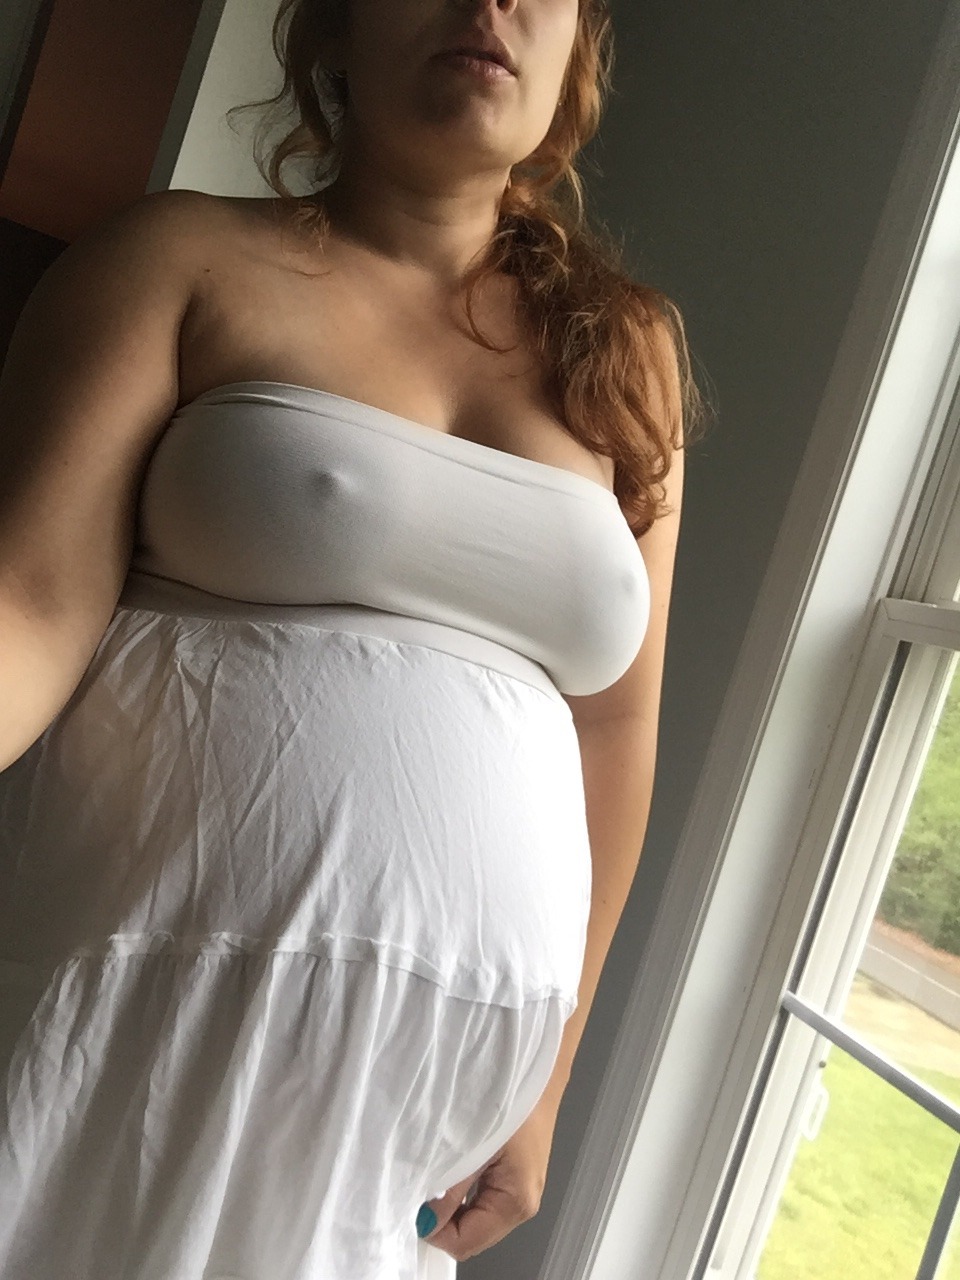 Enormous boobs tight shirt on top pregnant